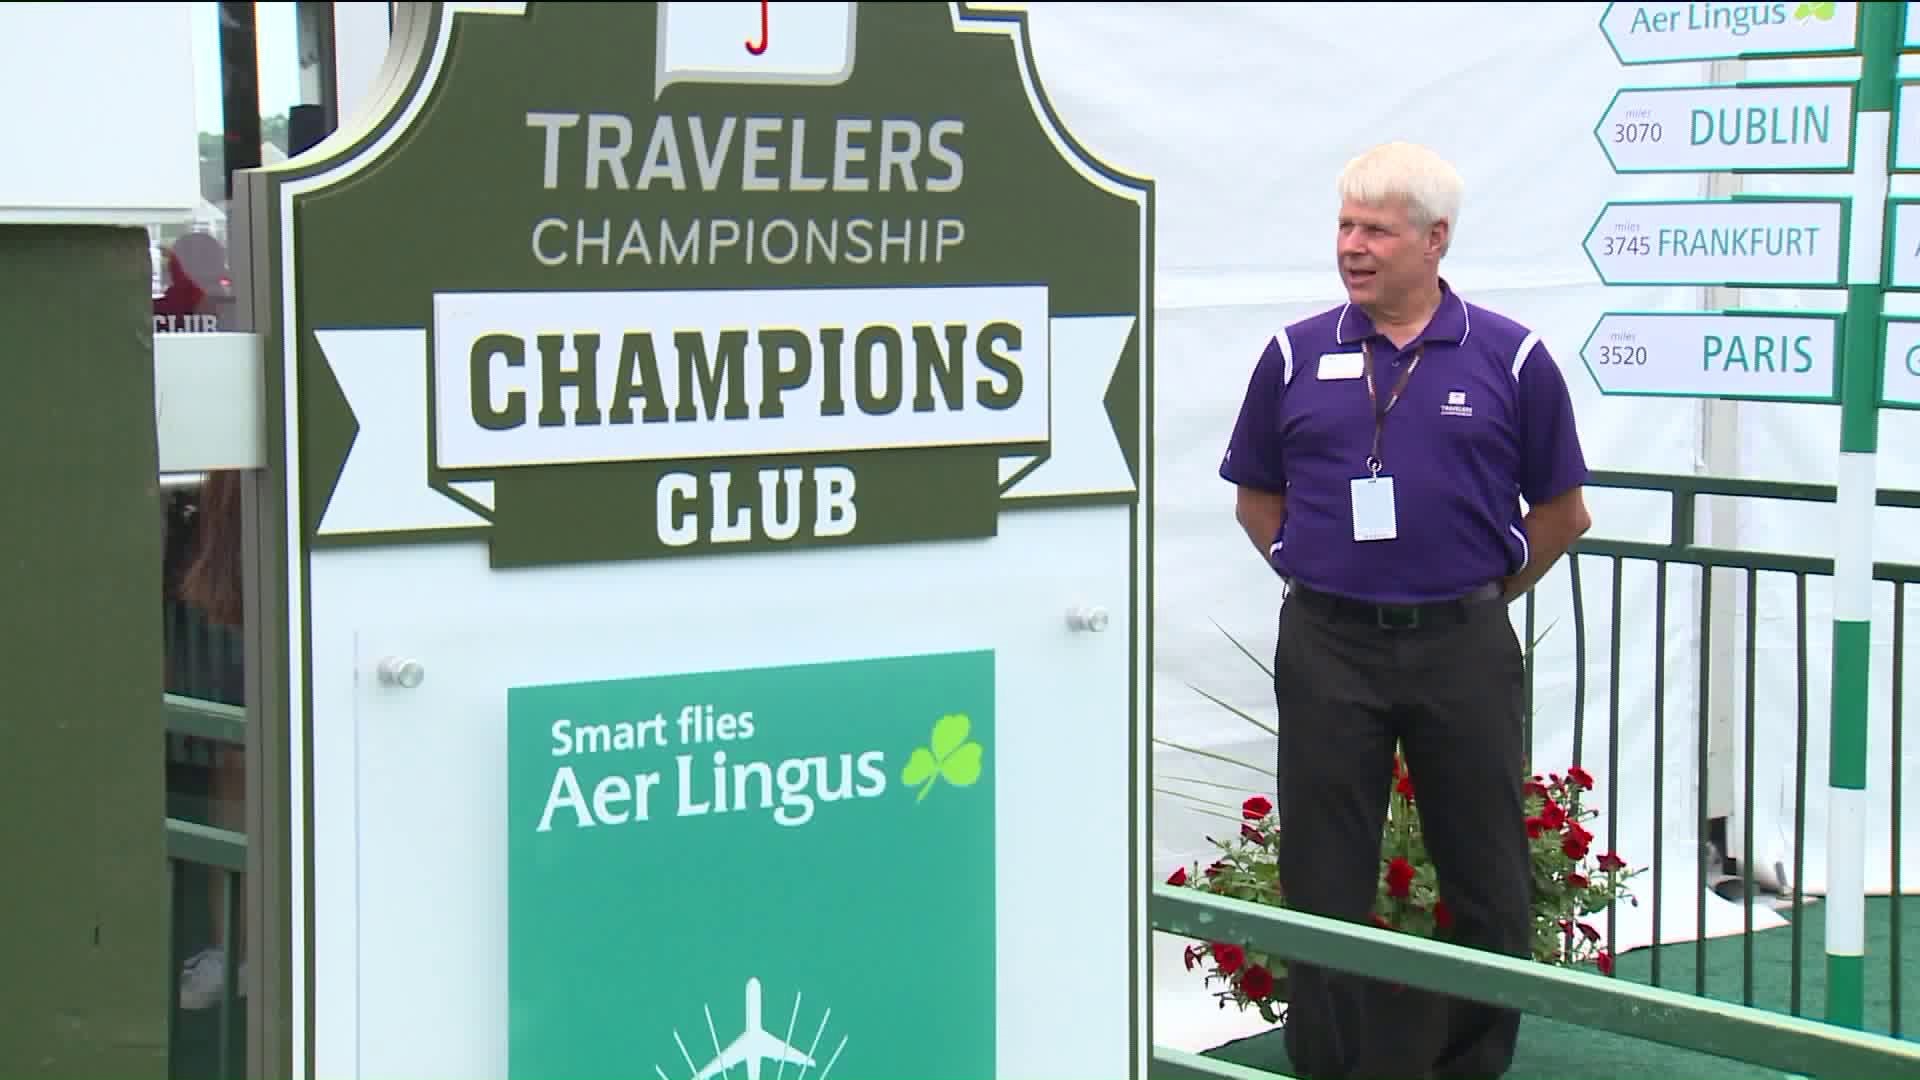 More than 4,000 people volunteeer at Travelers Championship